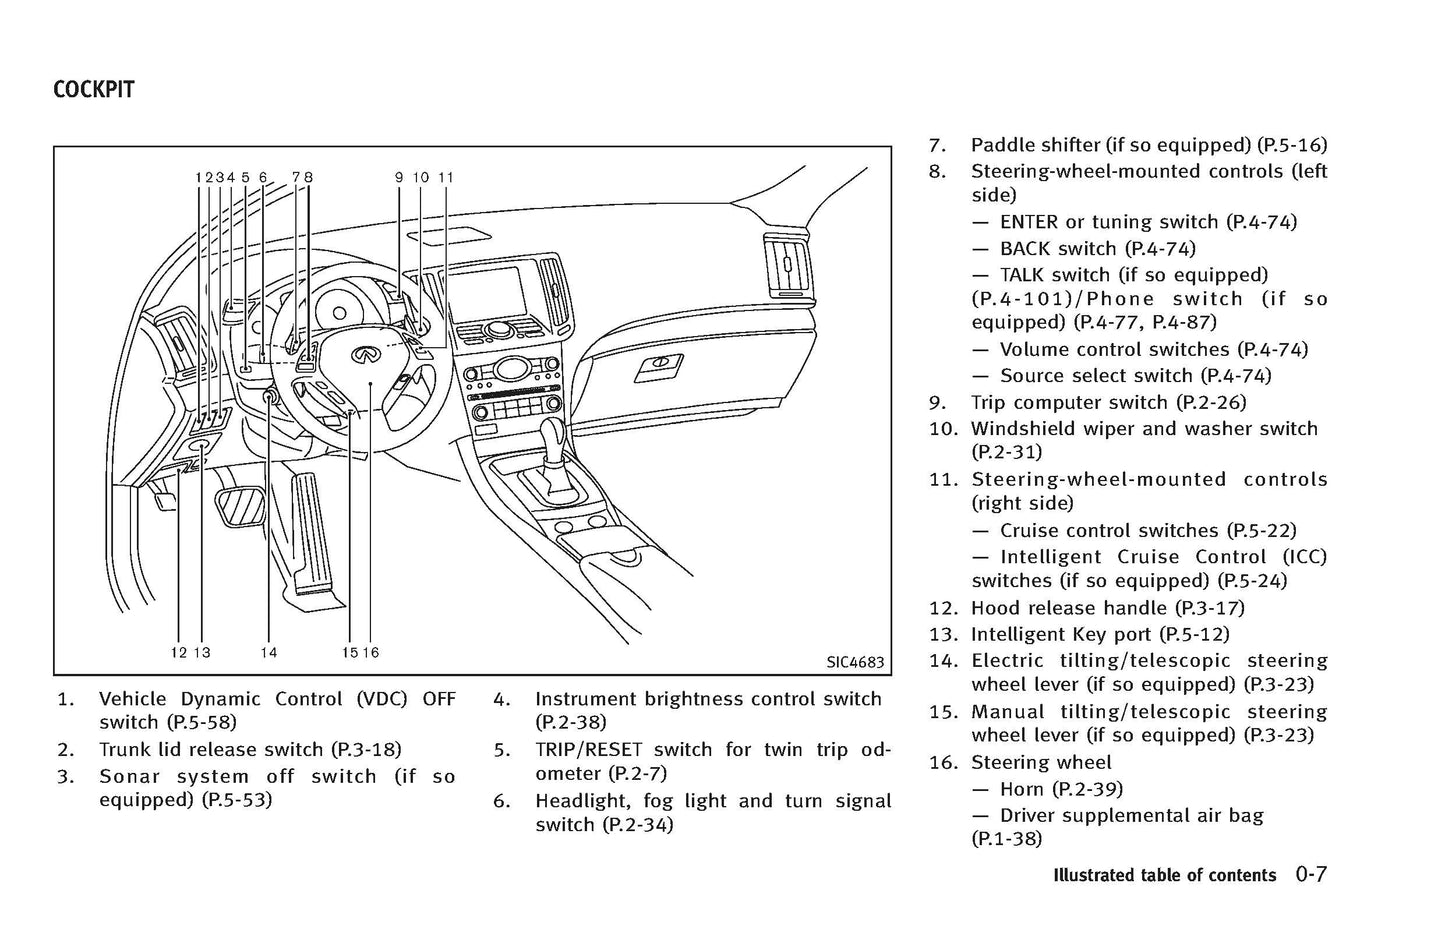 2014 Infiniti Q60 Owner's Manual | English